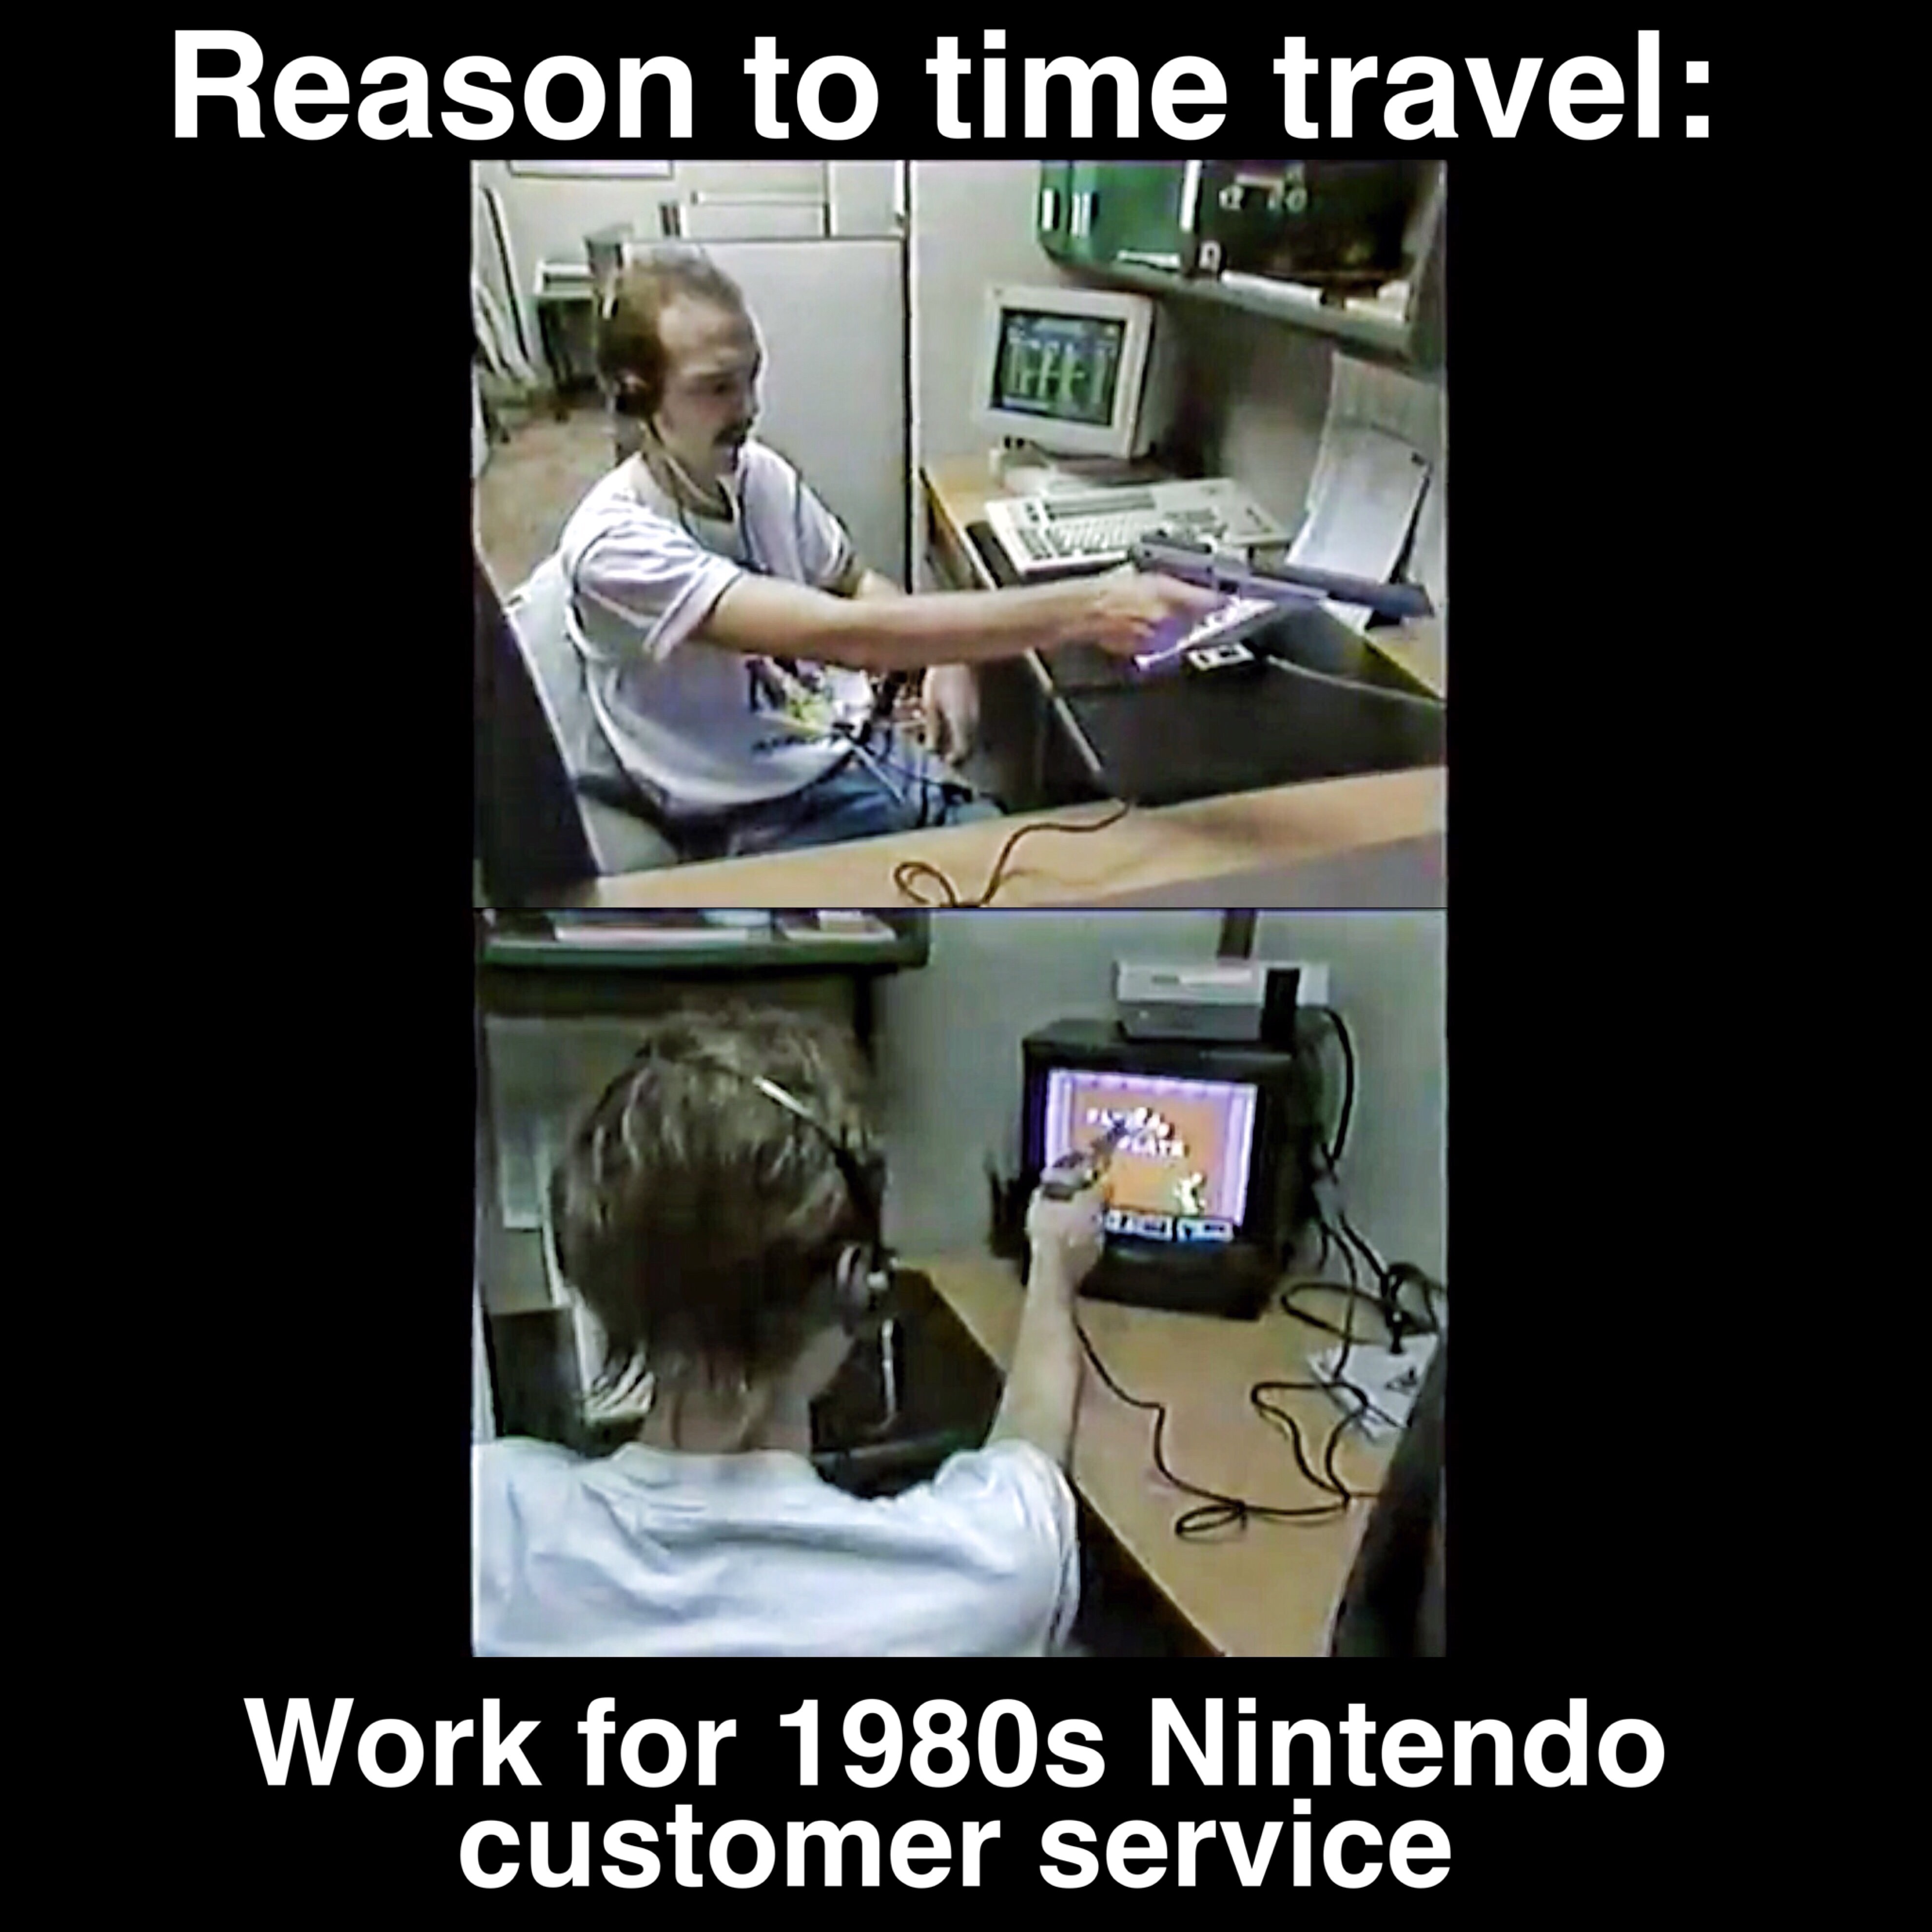 1980s work meme - Reason to time travel Work for 1980s Nintendo customer service